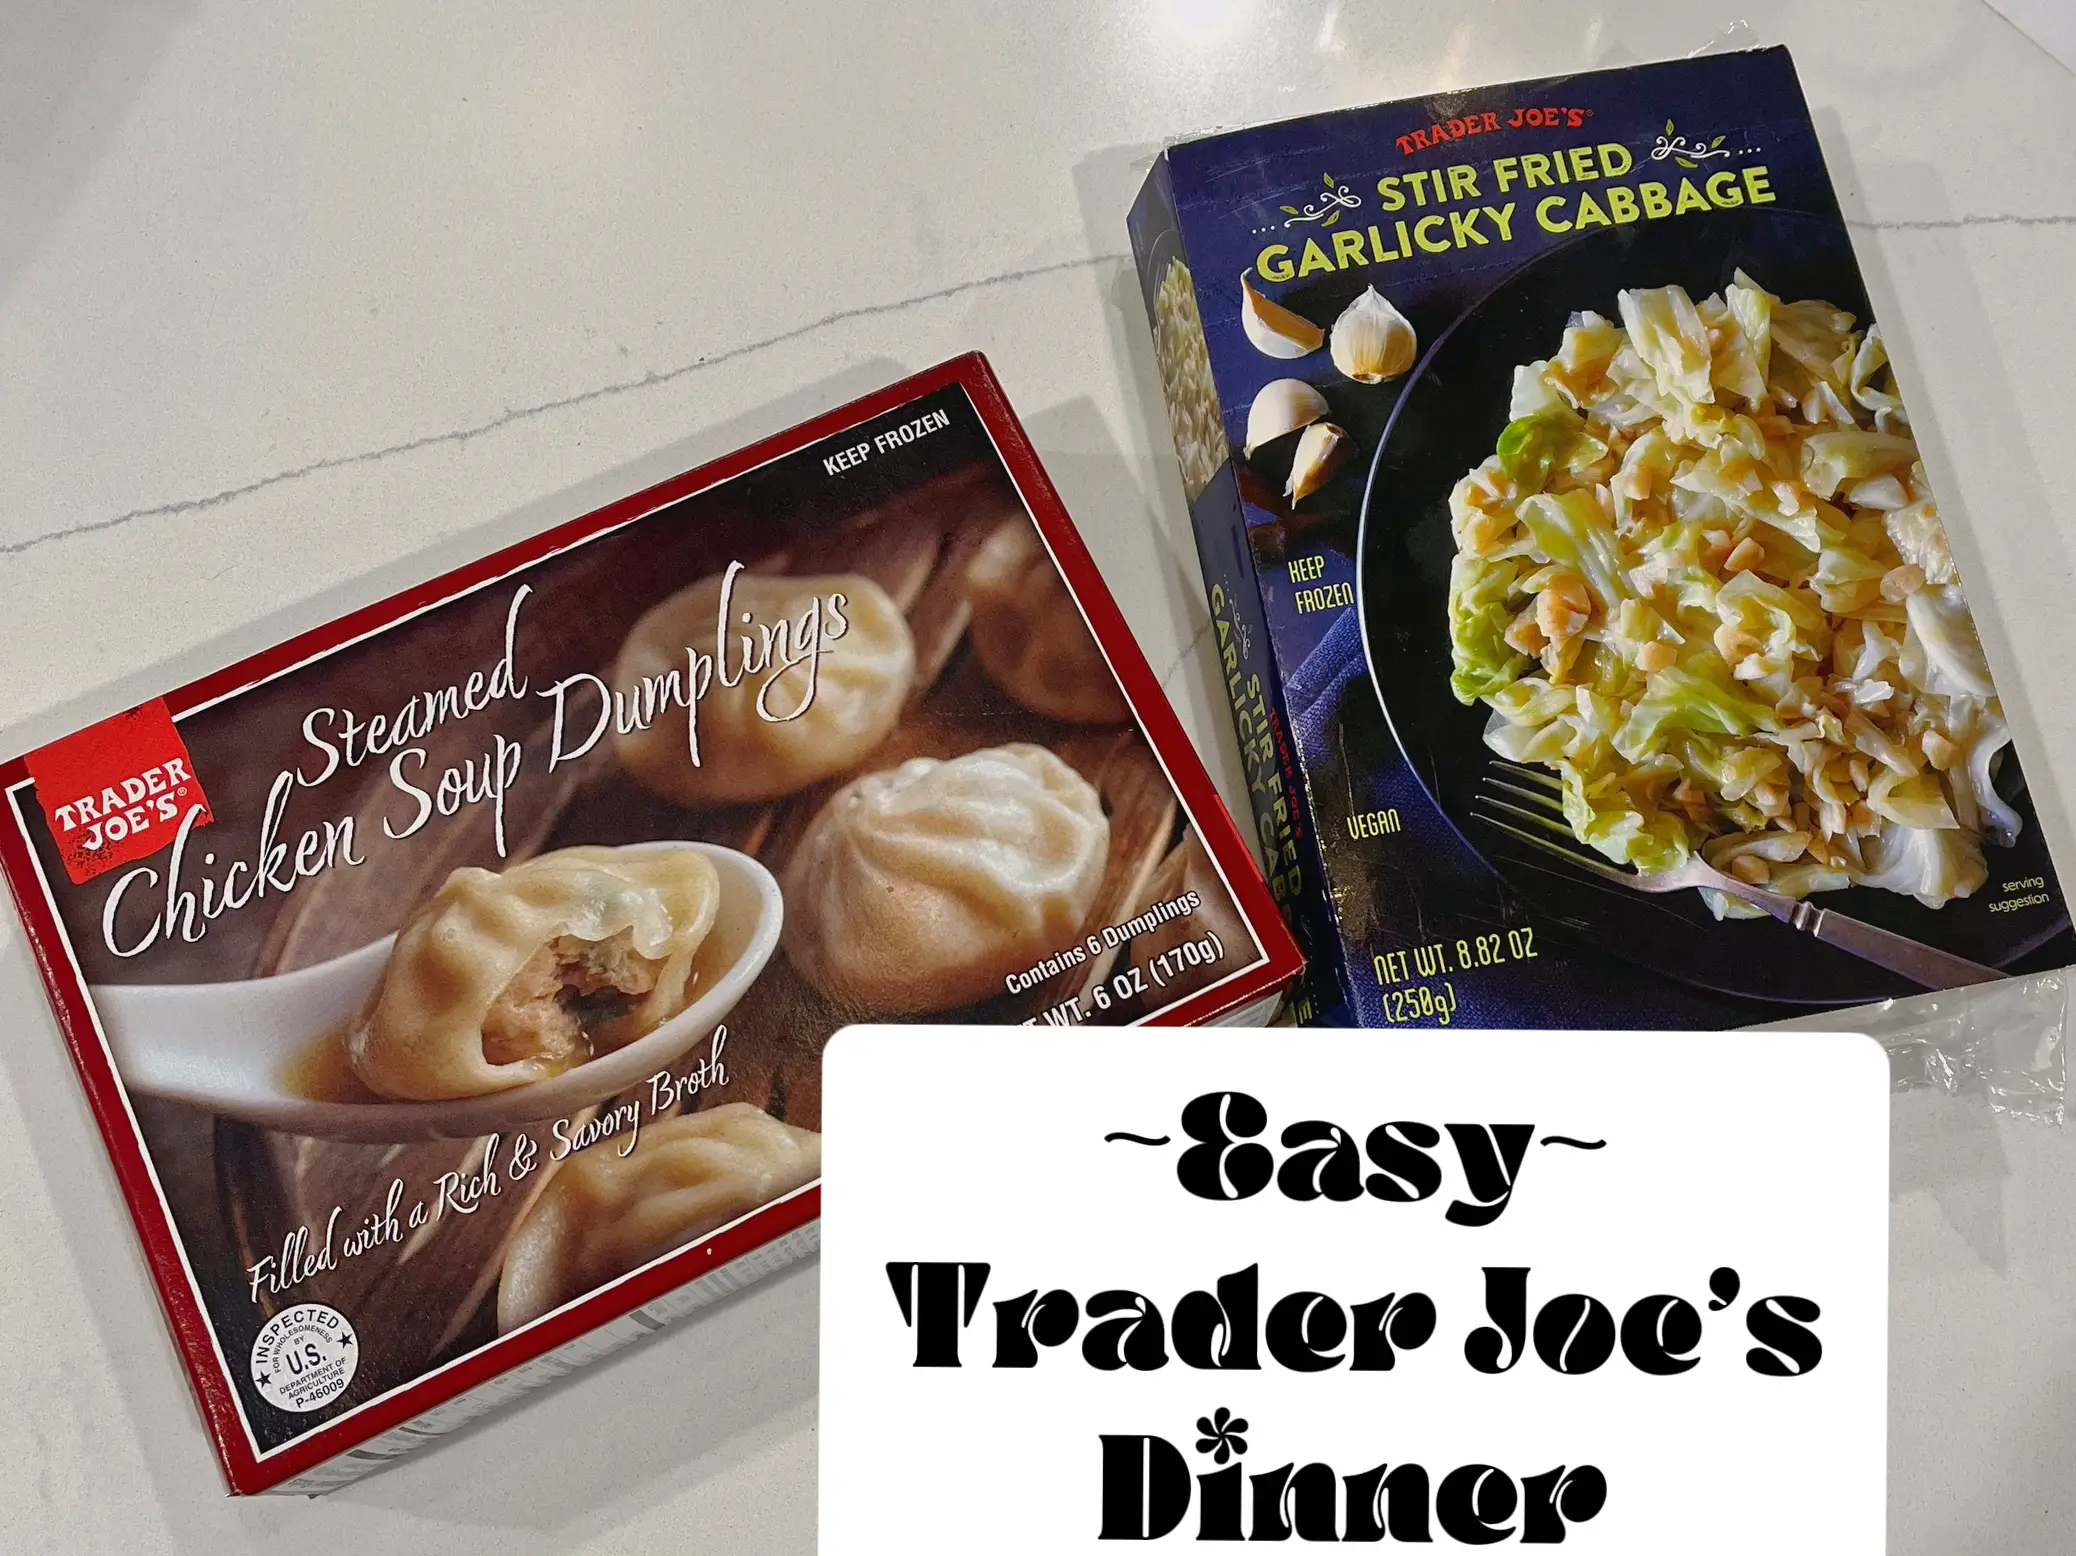 Trader Joe's - Steamed Chicken Soup Dumplings (6oz) 4 Boxes